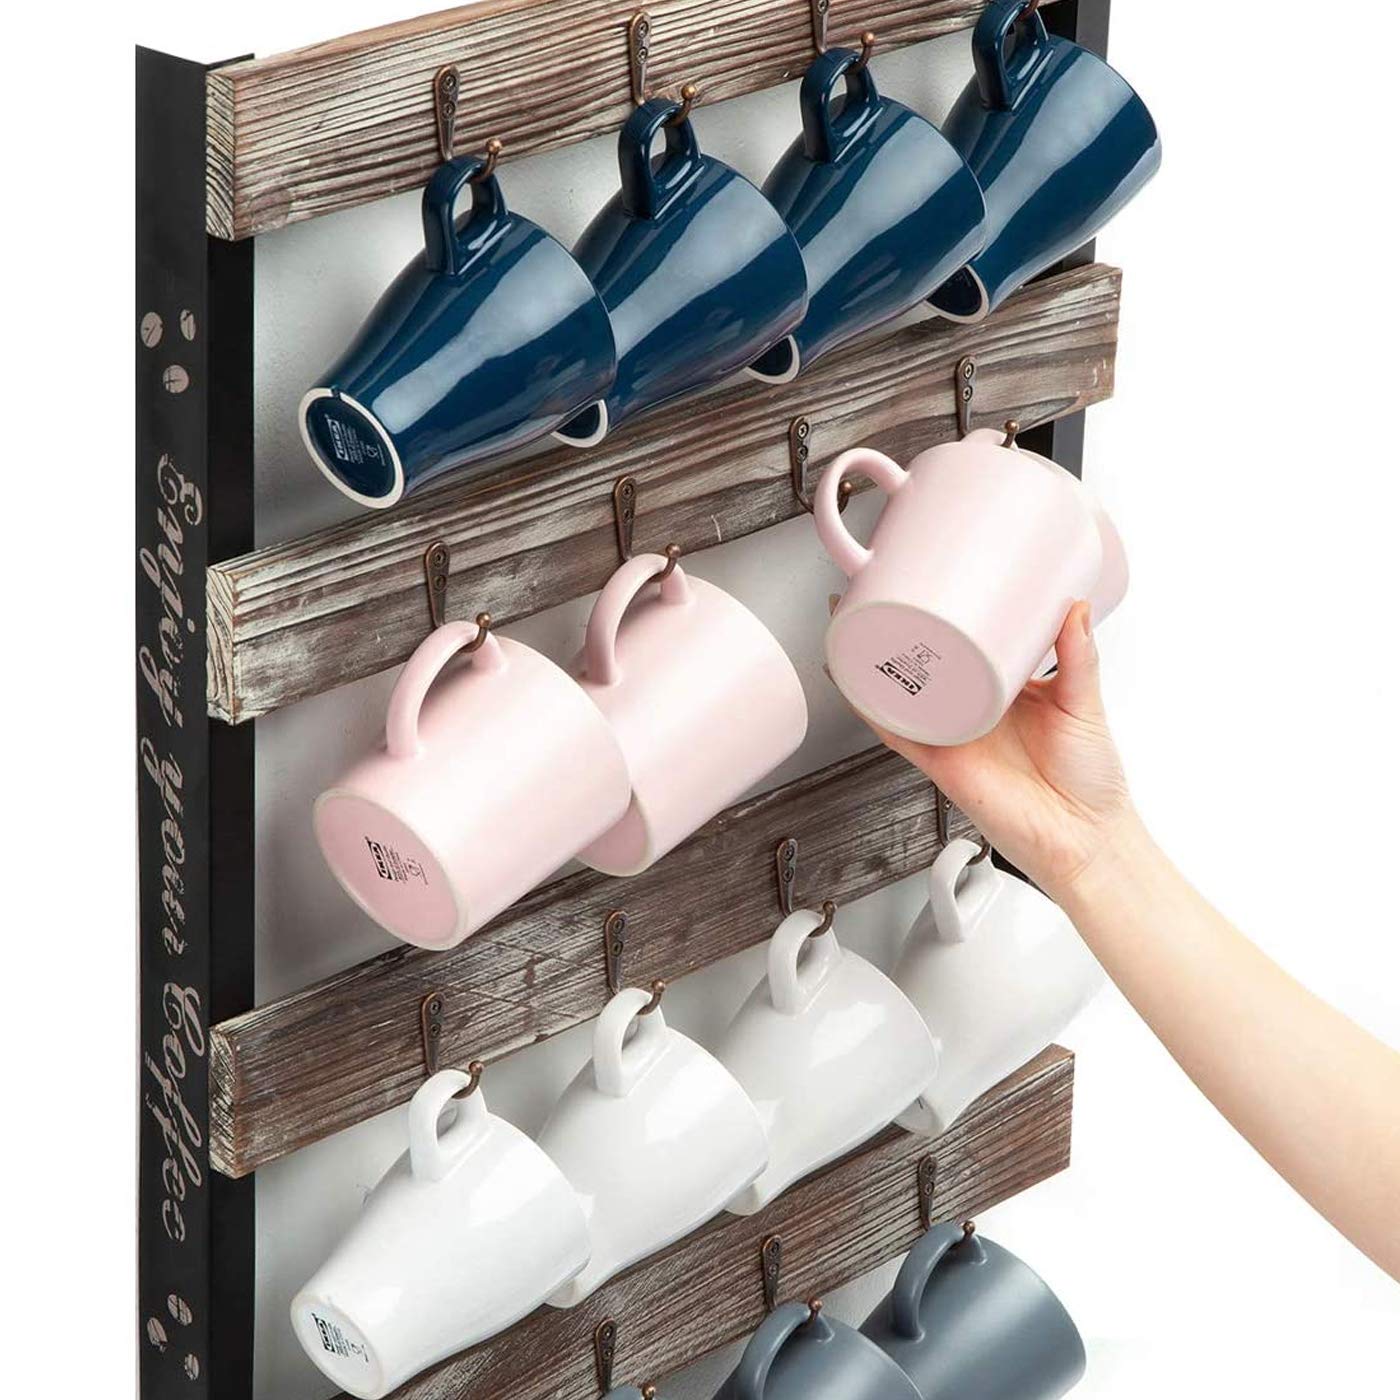 How To Store Coffee Mugs